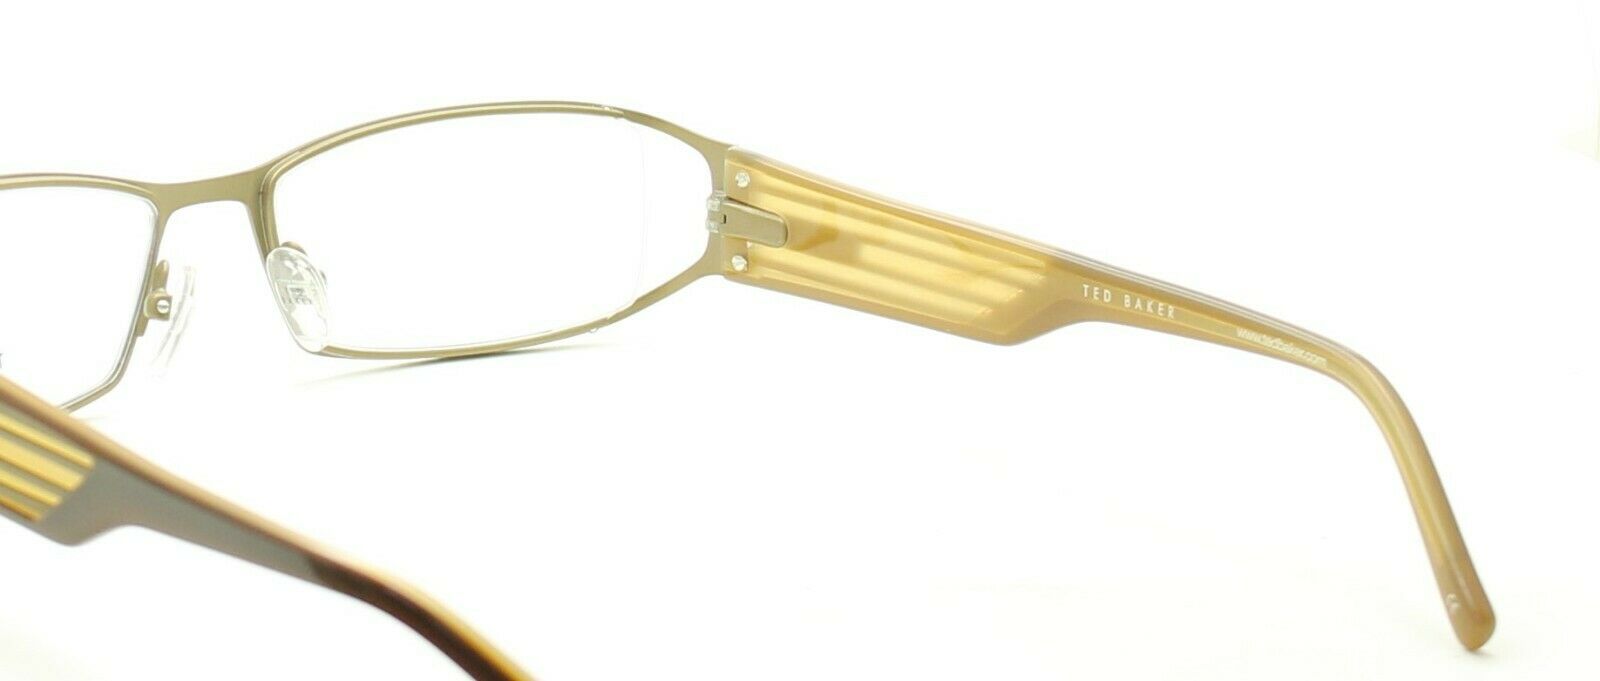 TED BAKER Down the Line 4180 129 Eyewear FRAMES Glasses Eyeglasses RX Optical